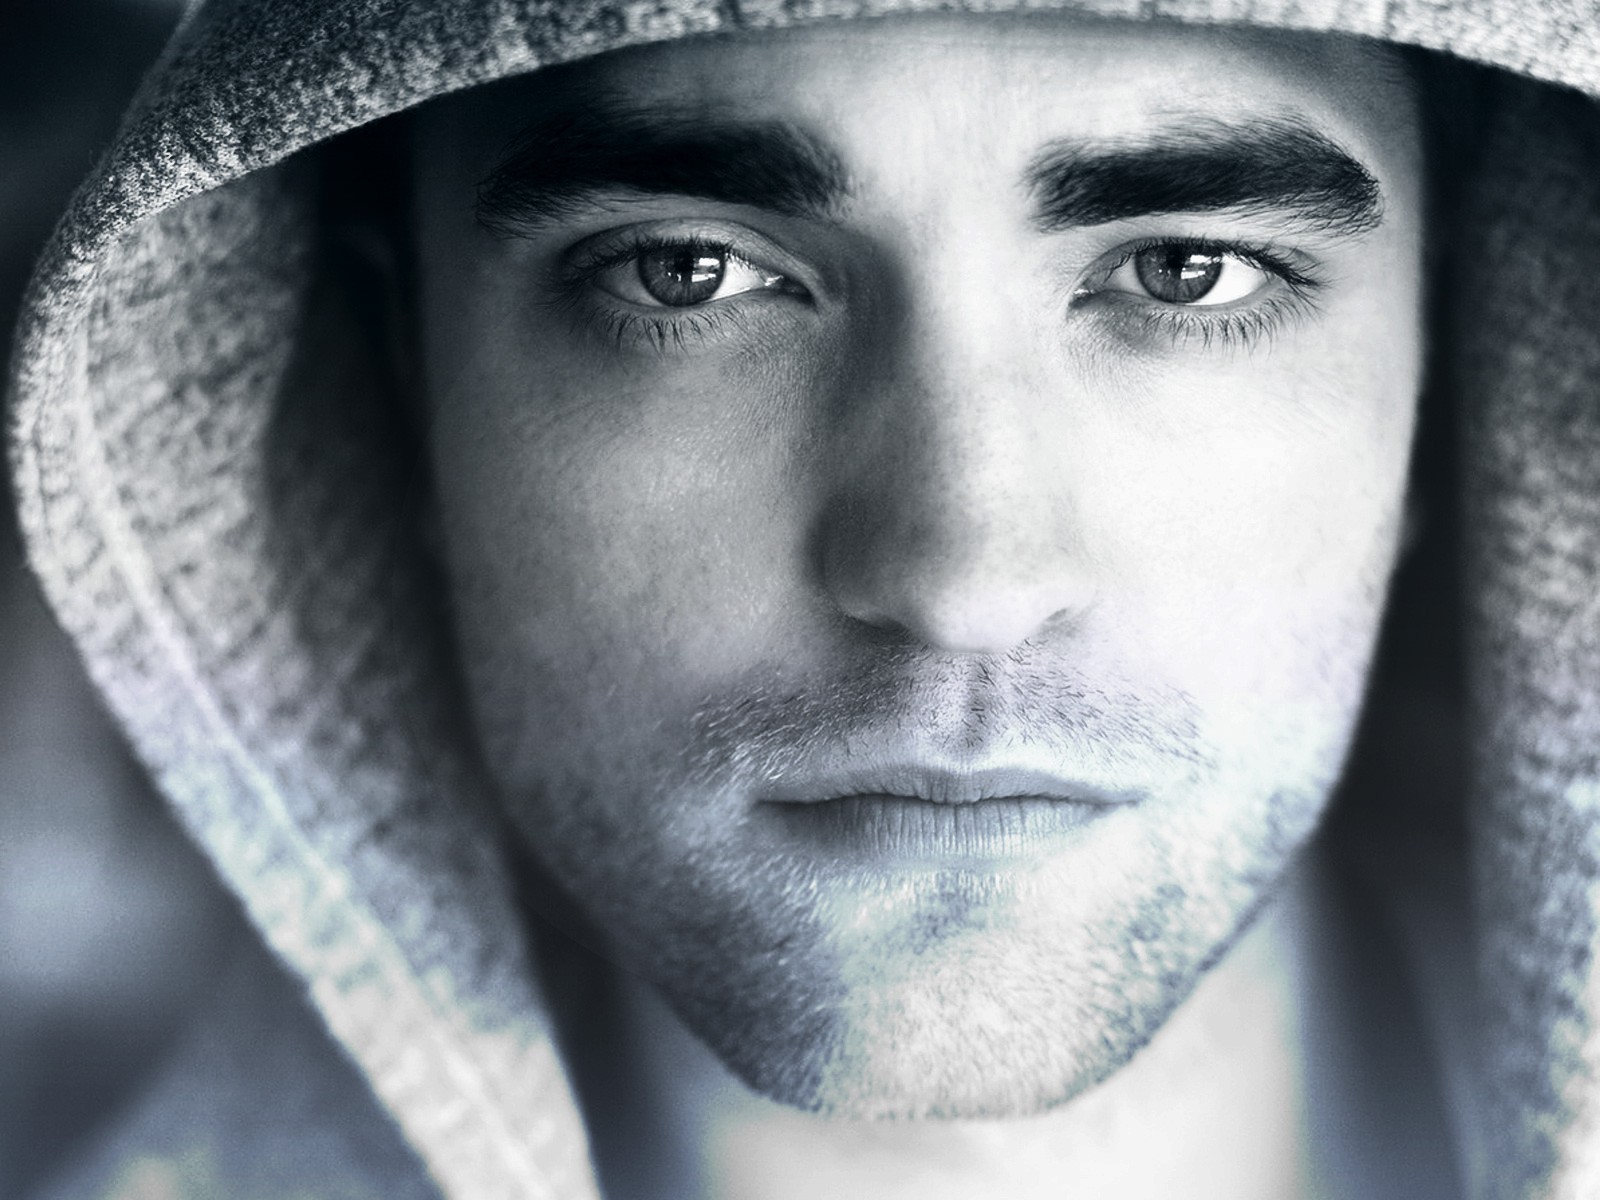 Robert Pattinson Picture